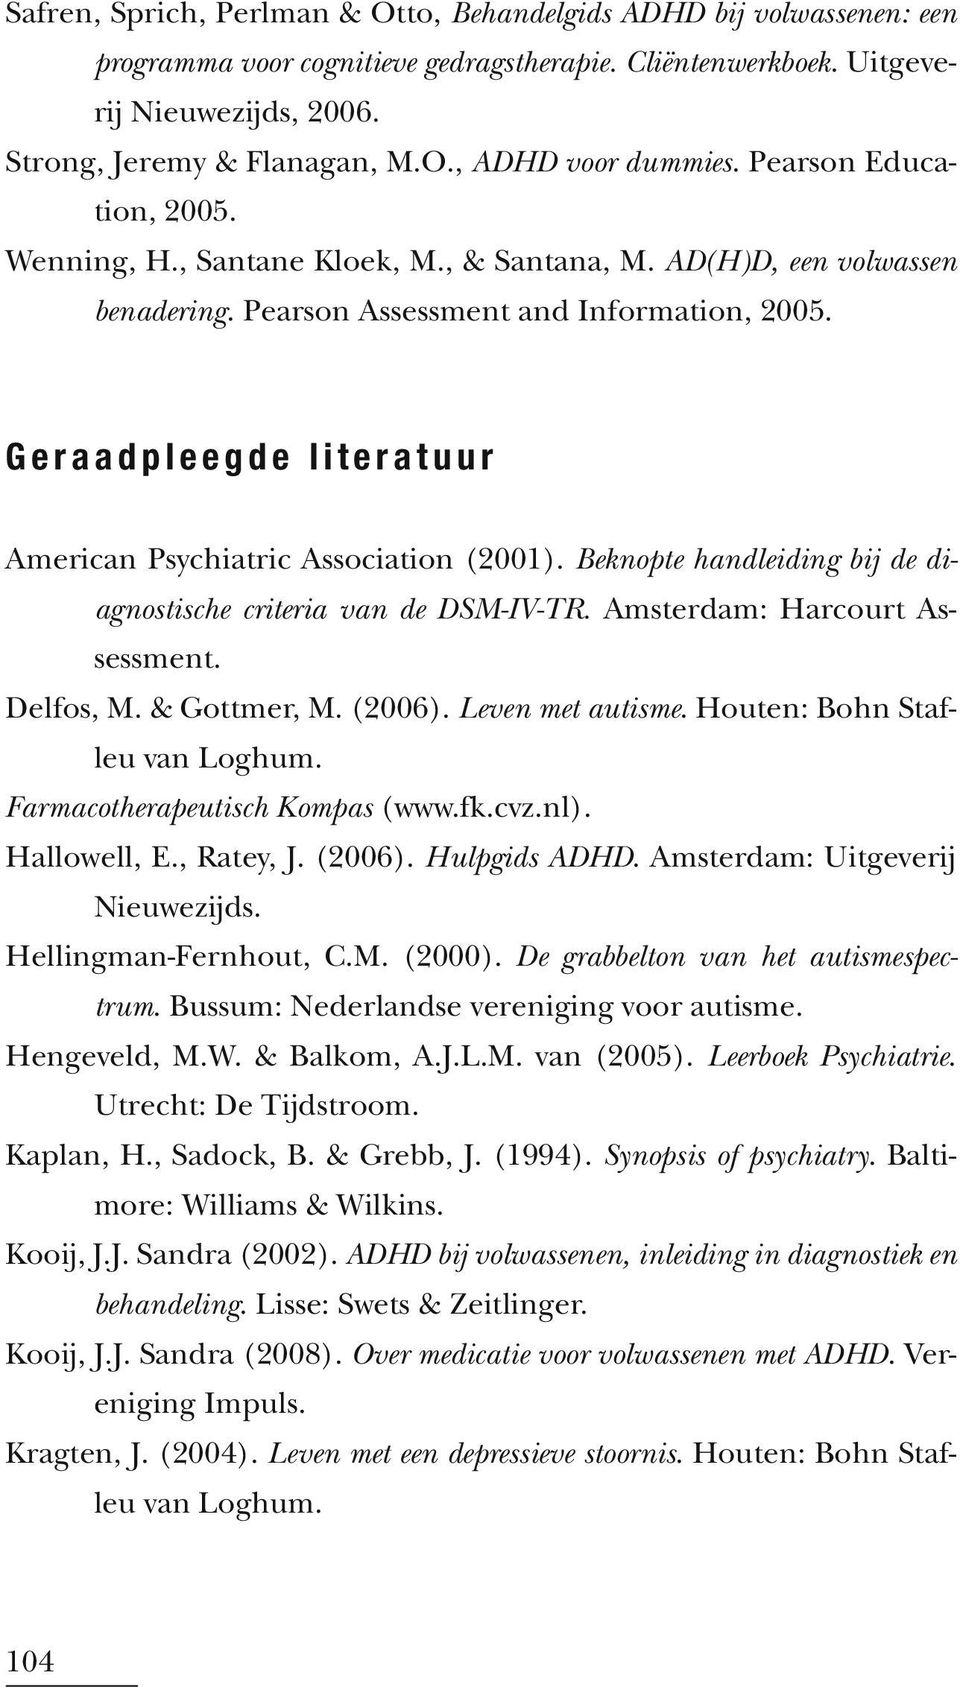 Geraadpleegde literatuur American Psychiatric Association (2001). Beknopte handleiding bij de diagnostische criteria van de DSM-IV-TR. Amsterdam: Harcourt Assessment. Delfos, M. & Gottmer, M. (2006).